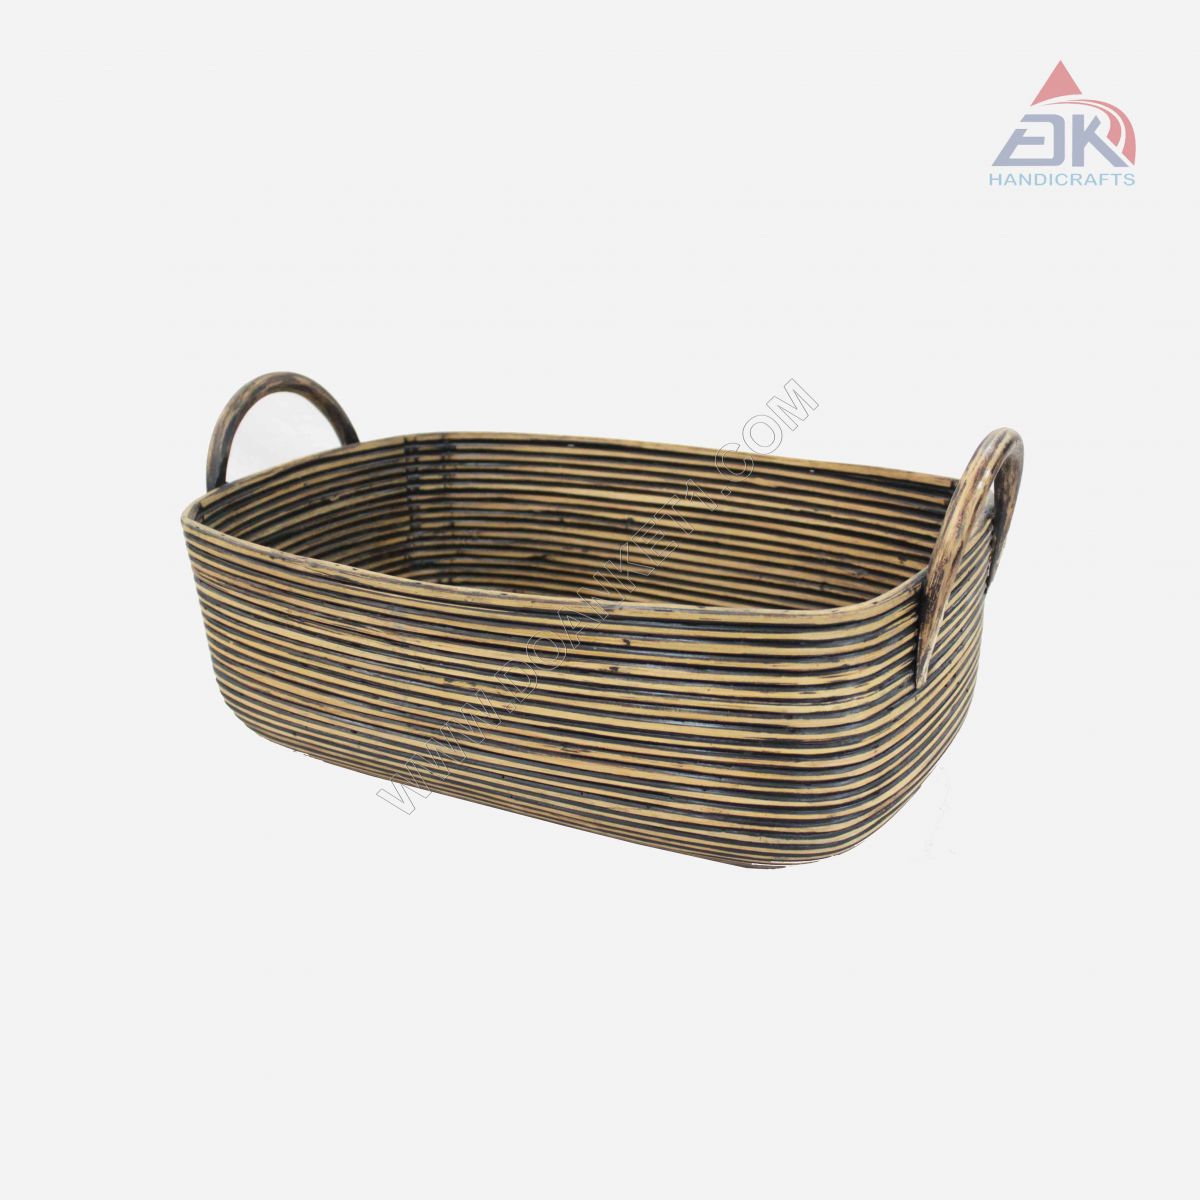 Rattan Basket # DK44